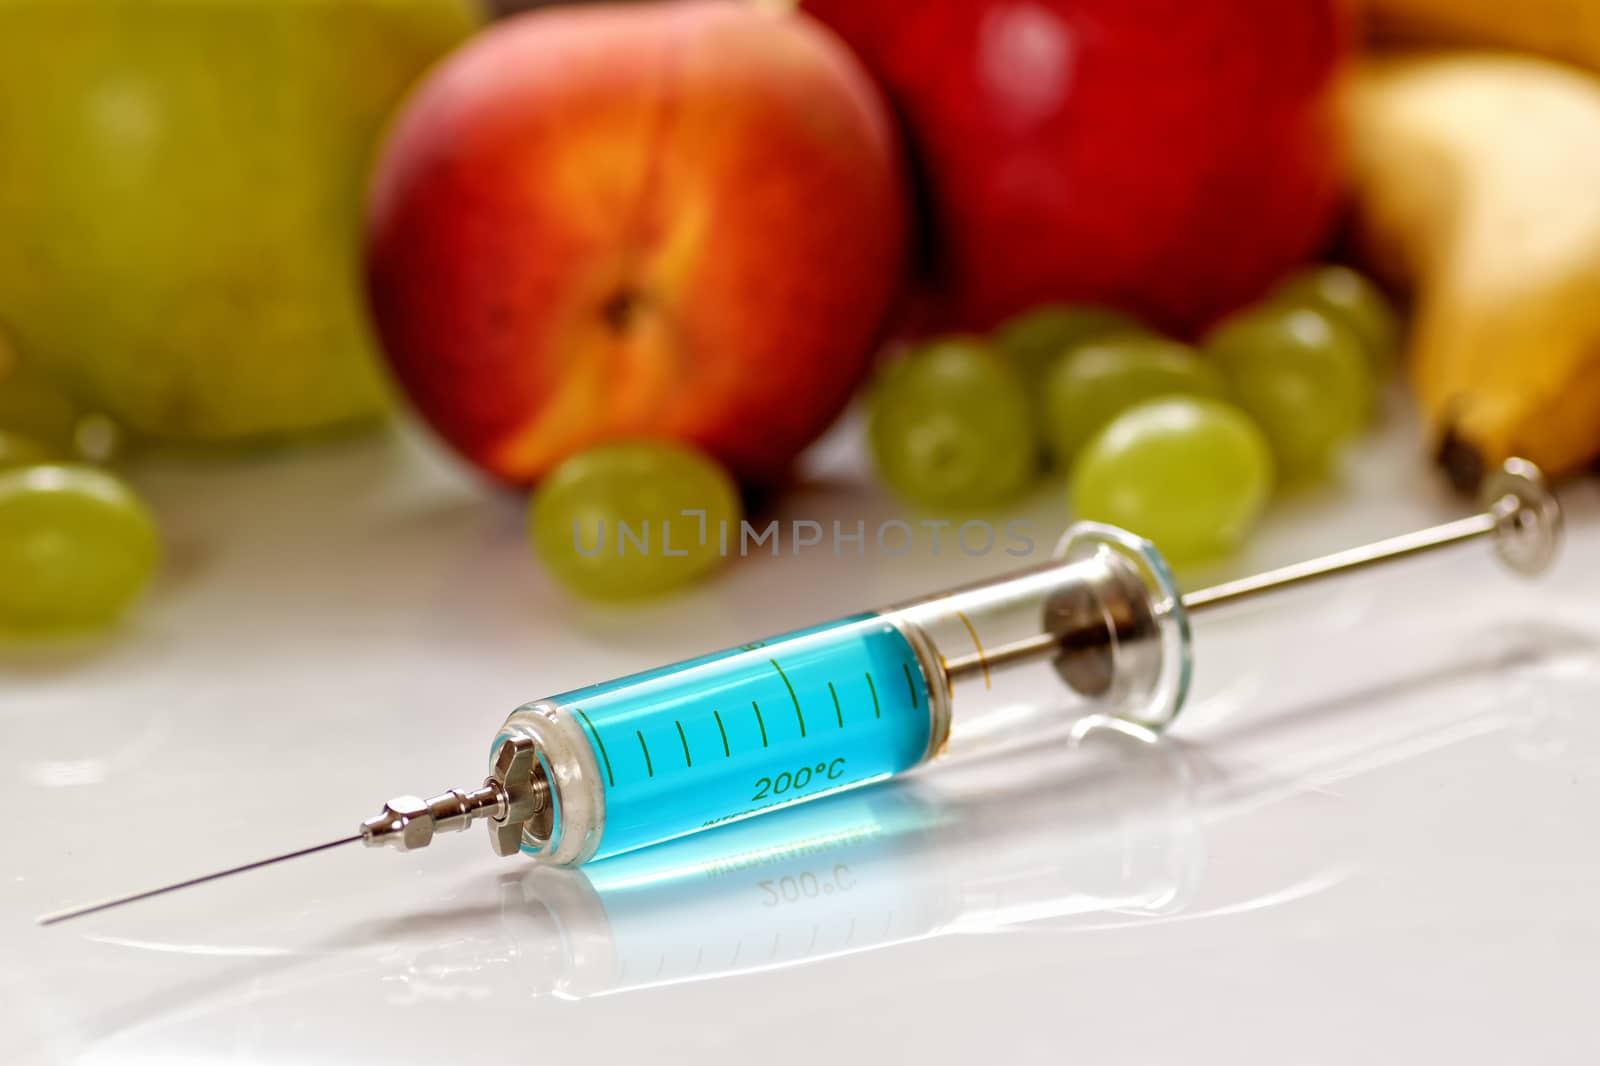 fresh fruits versus modern medicine, injection with blue fluid